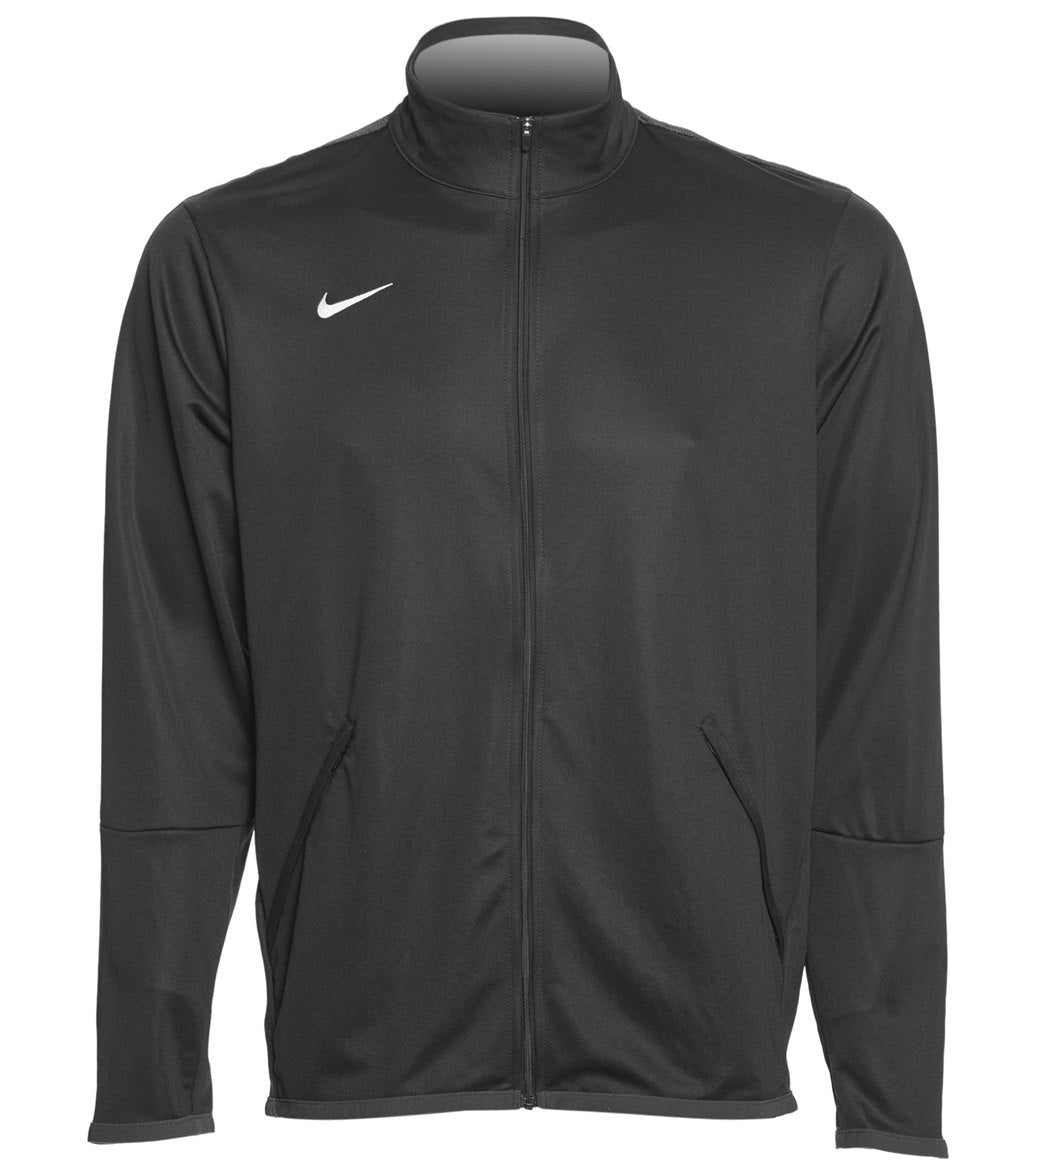 Nike Men's Training Jacket at SwimOutlet.com